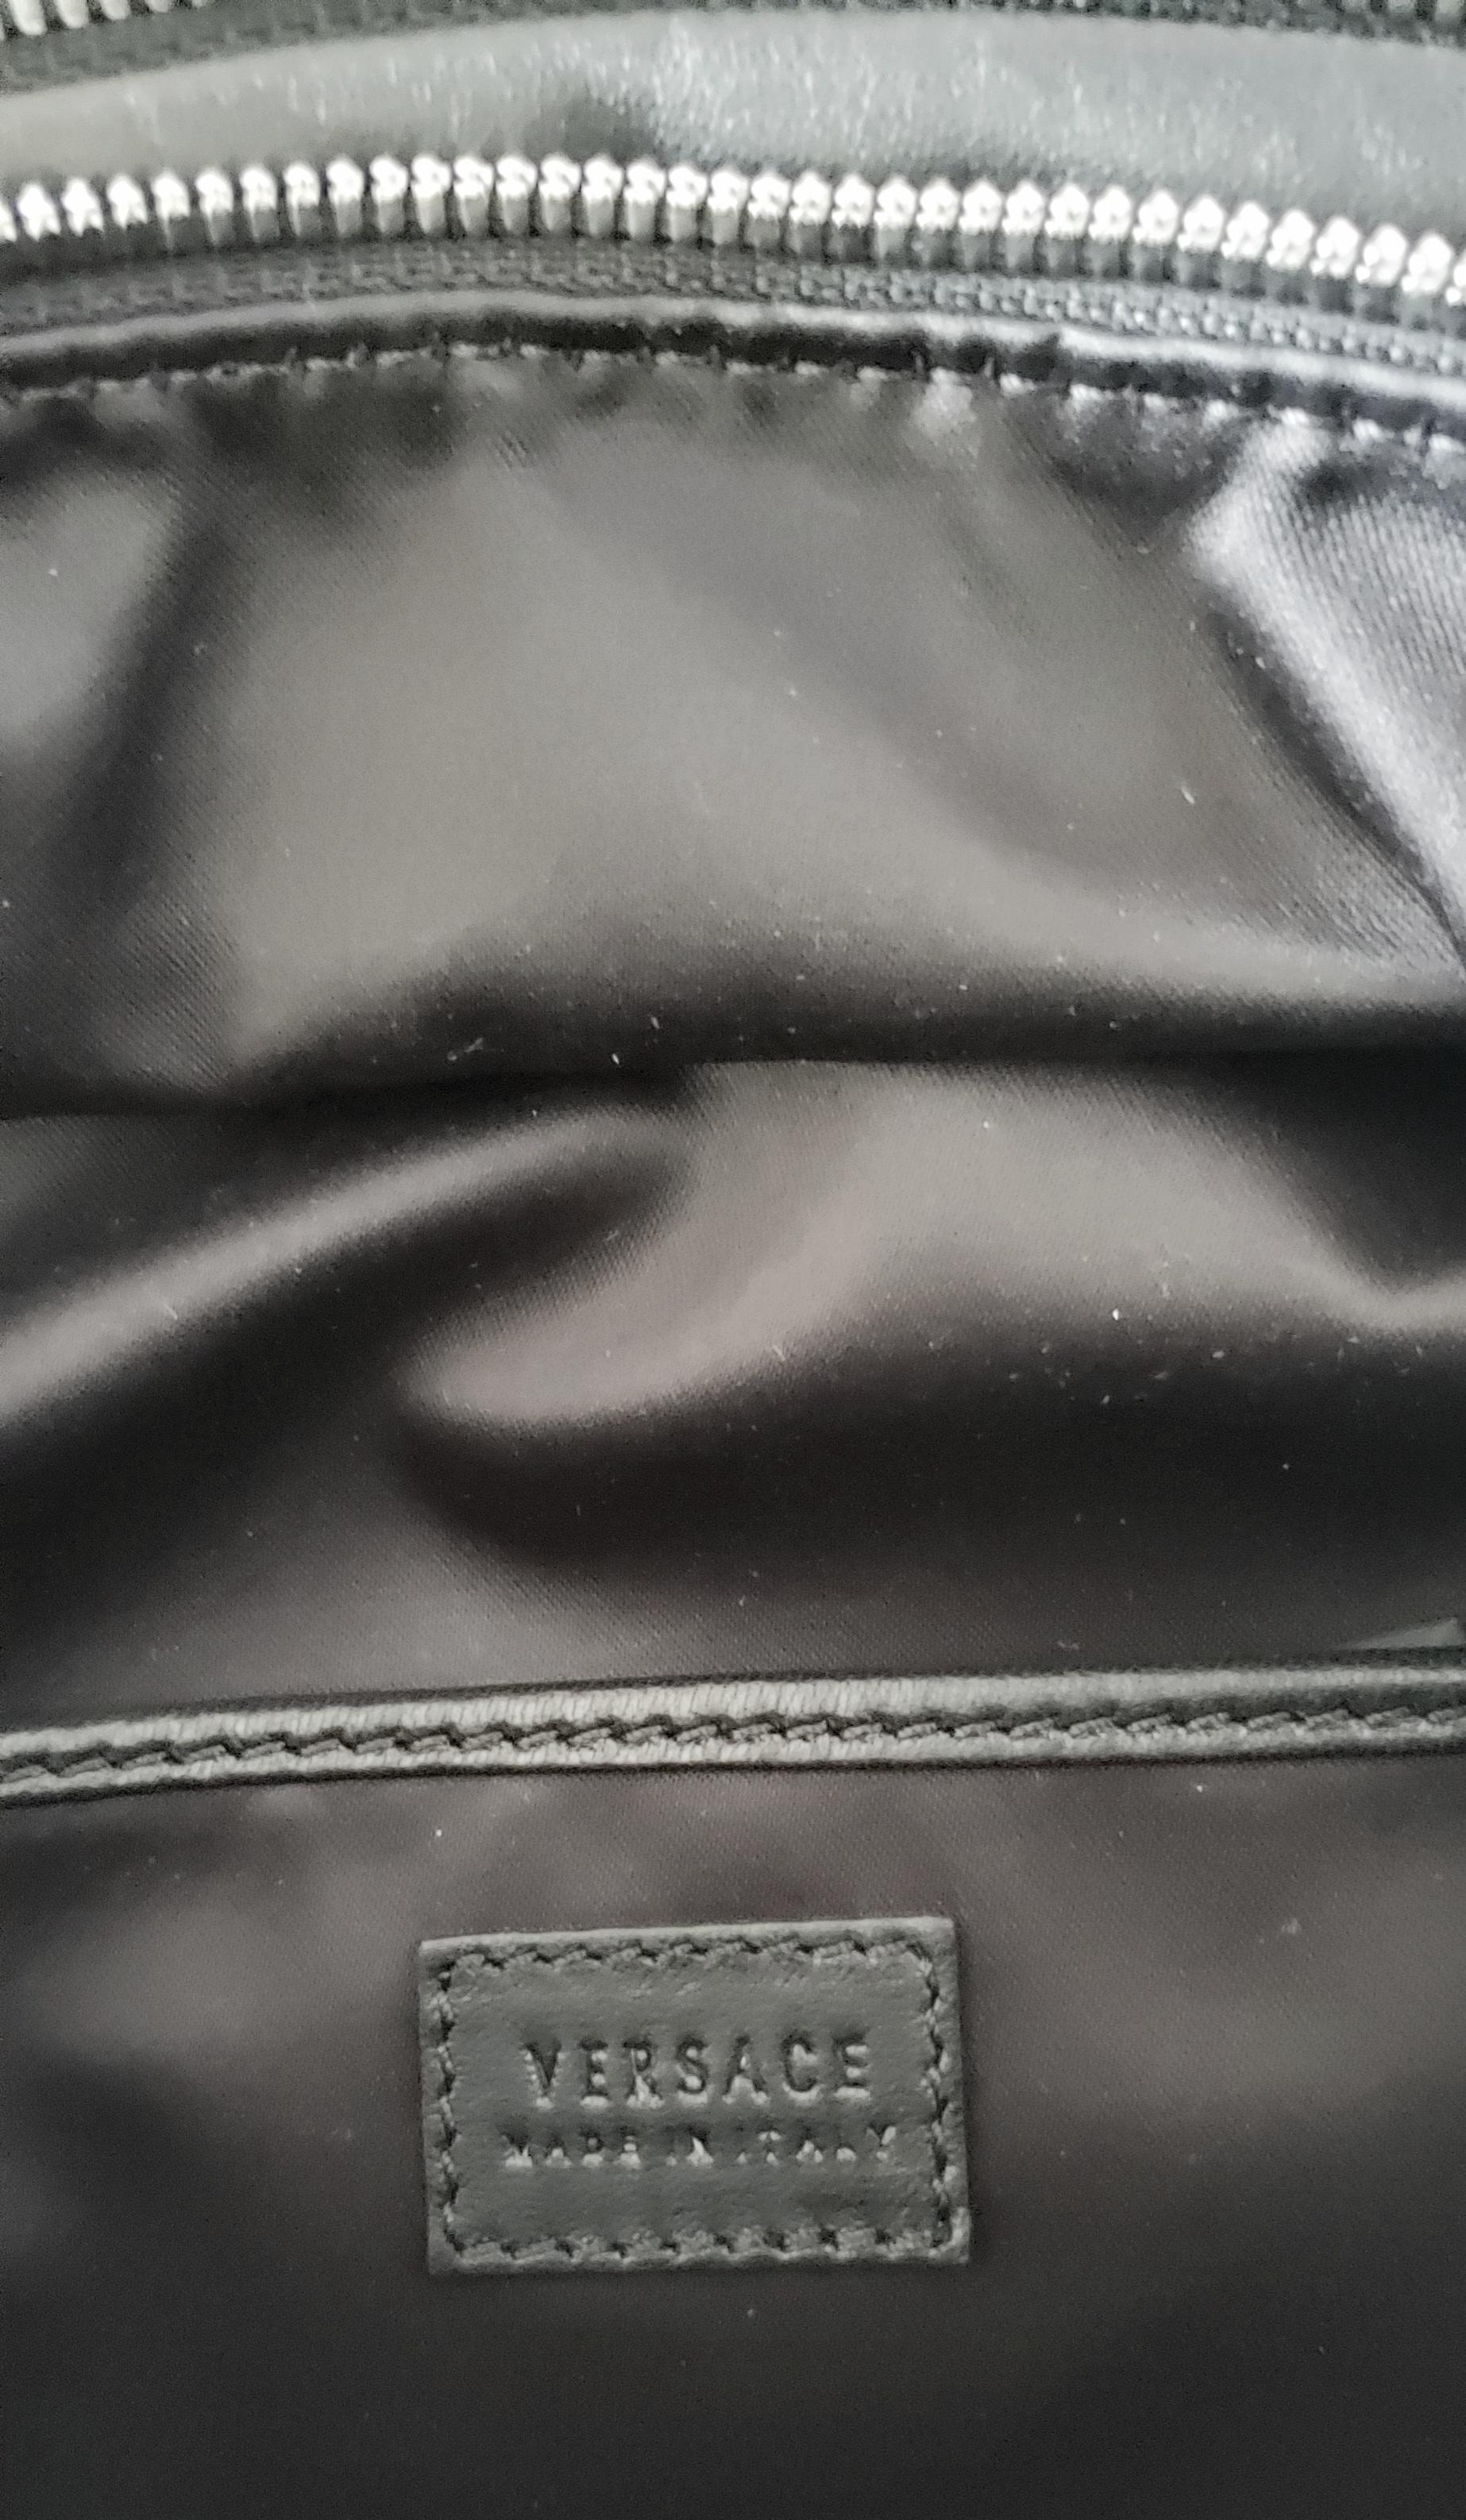 Fall/2012 Look #15 VERSACE BLACK CROSS PRINTED VELVET Bag w/ BOTTOM HANDLE For Sale 4